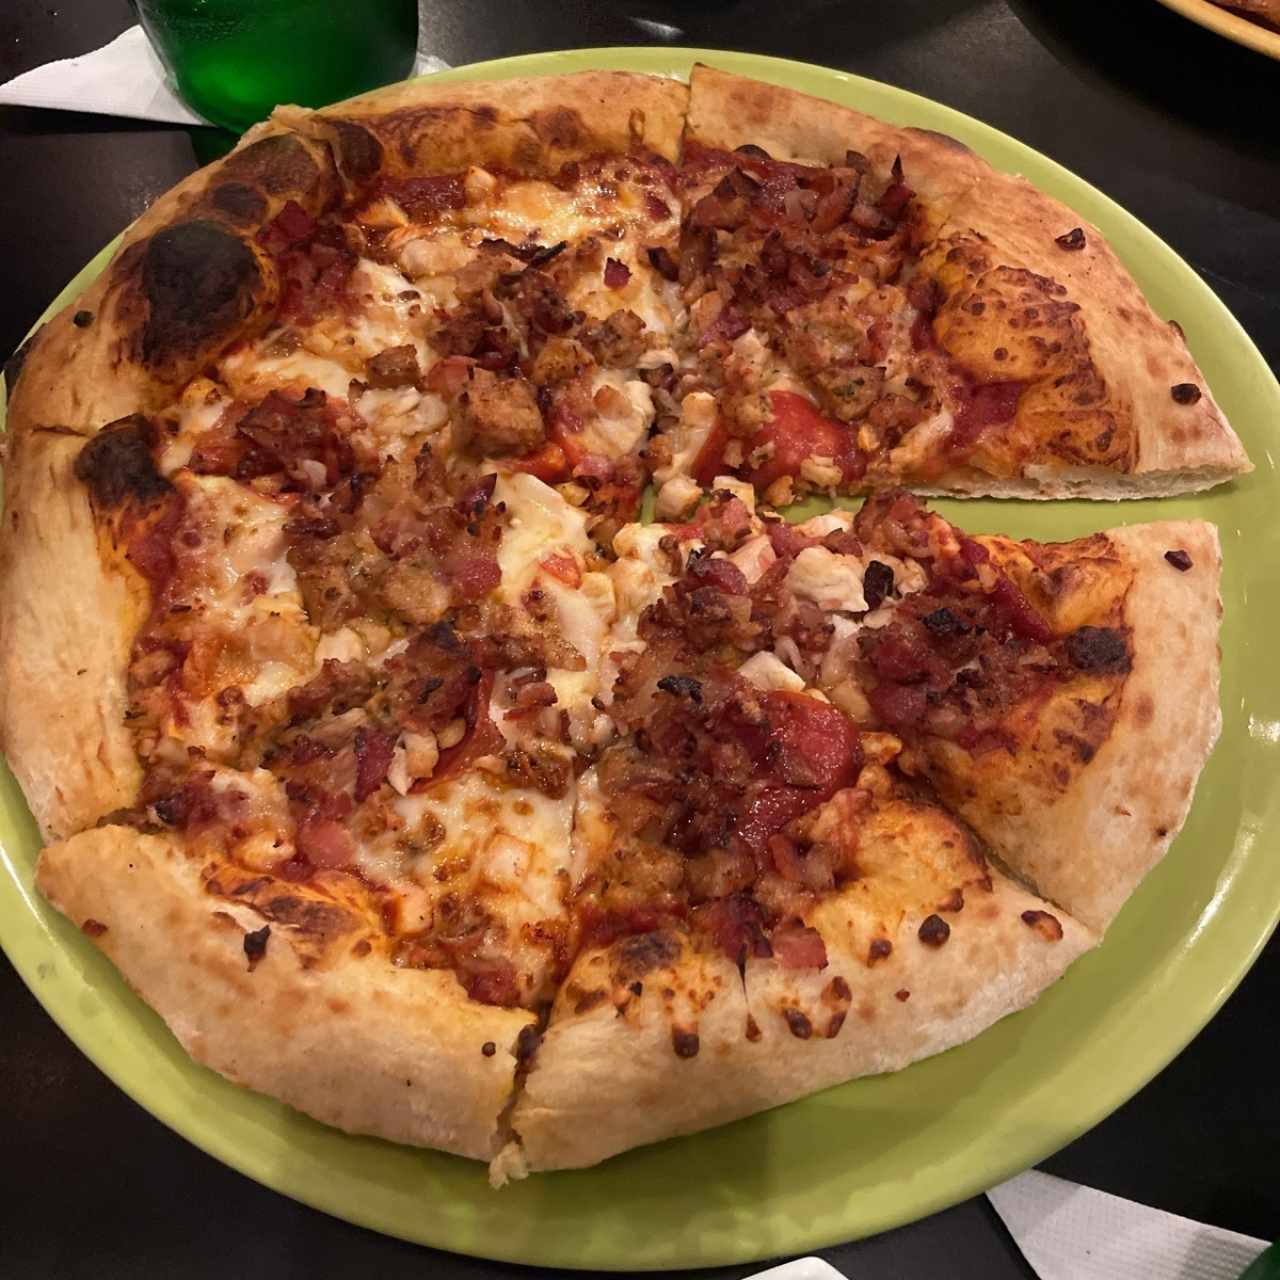 Pizza 12" - Cuatro Carnes